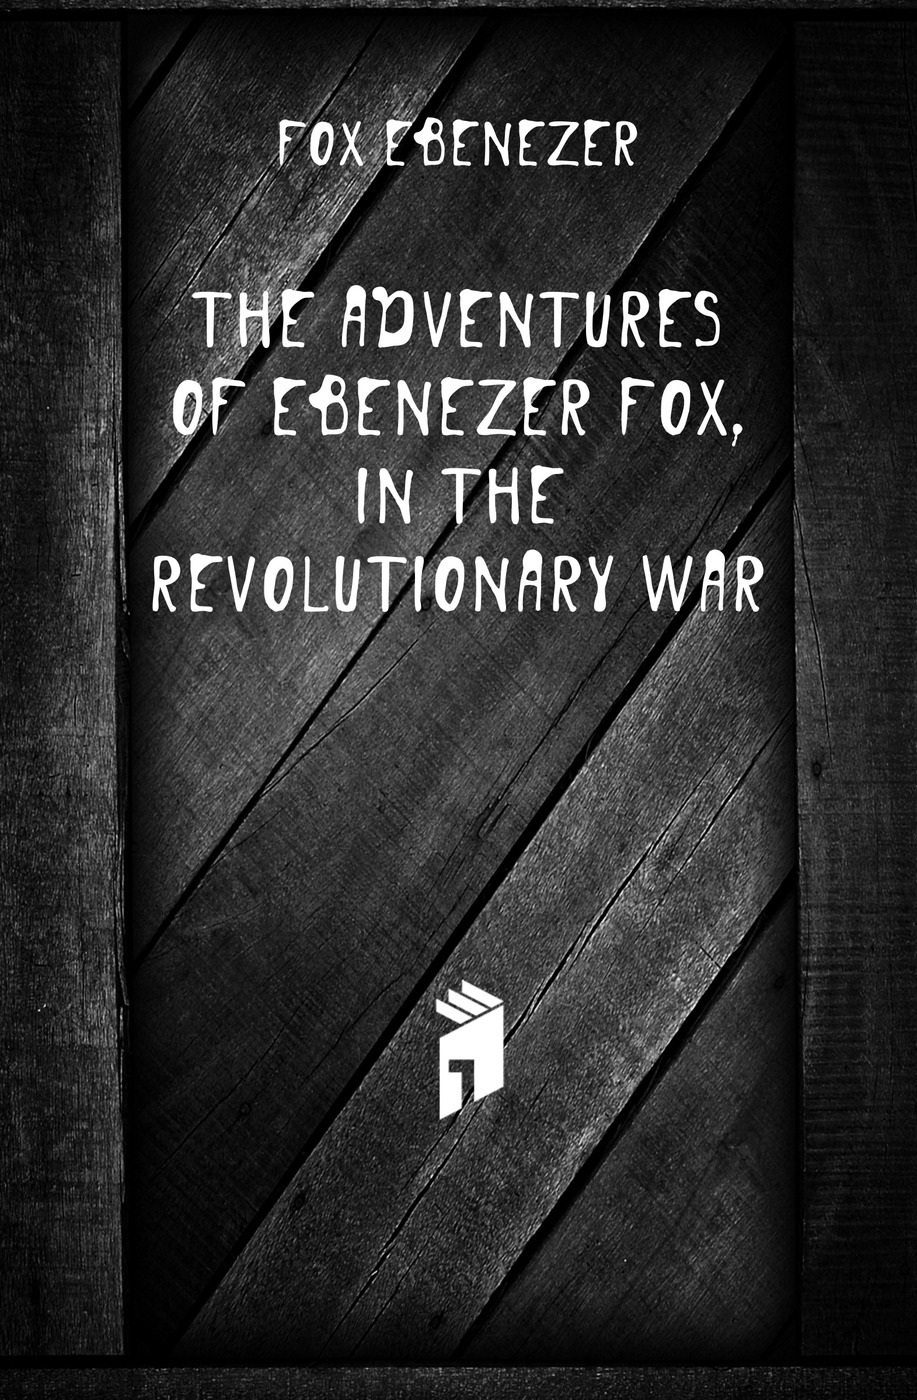 The adventures of Ebenezer Fox, in the Revolutionary War